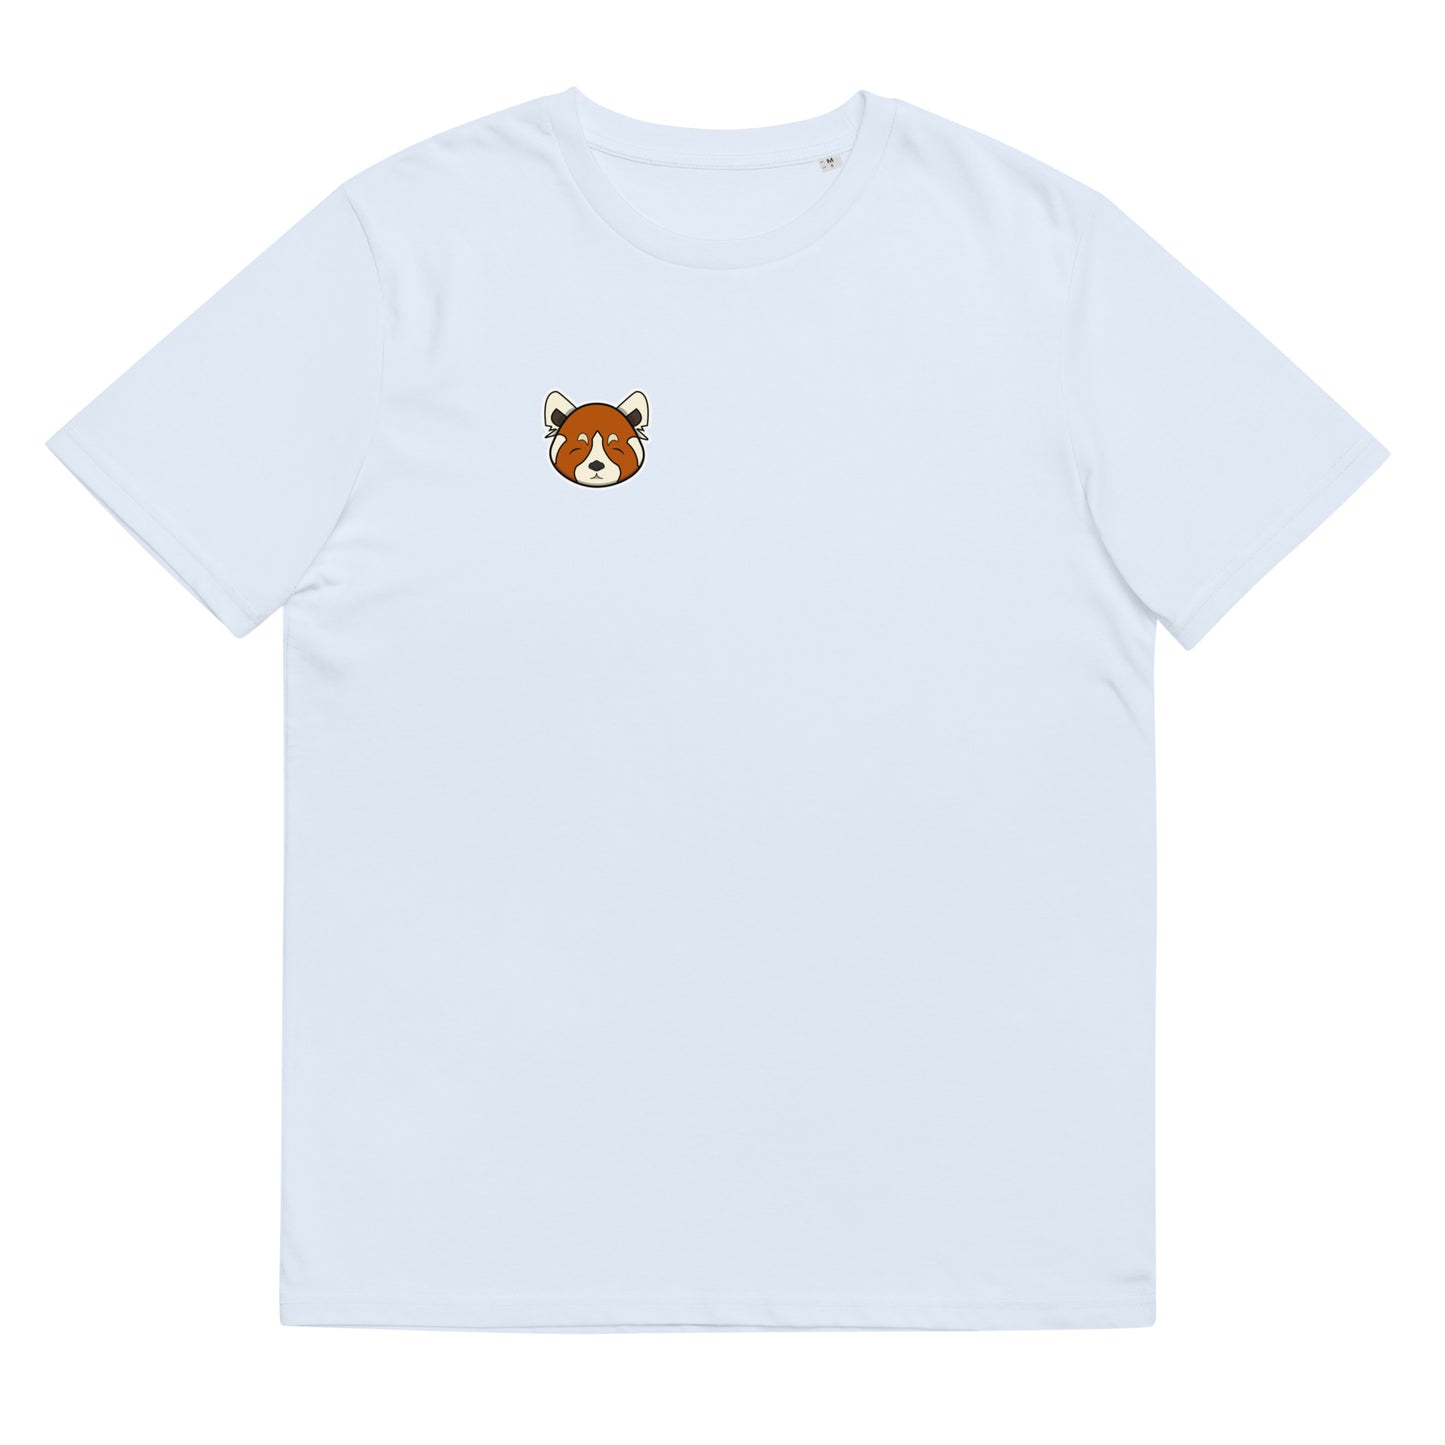 Red Panda 4 Me organic cotton t-shirt